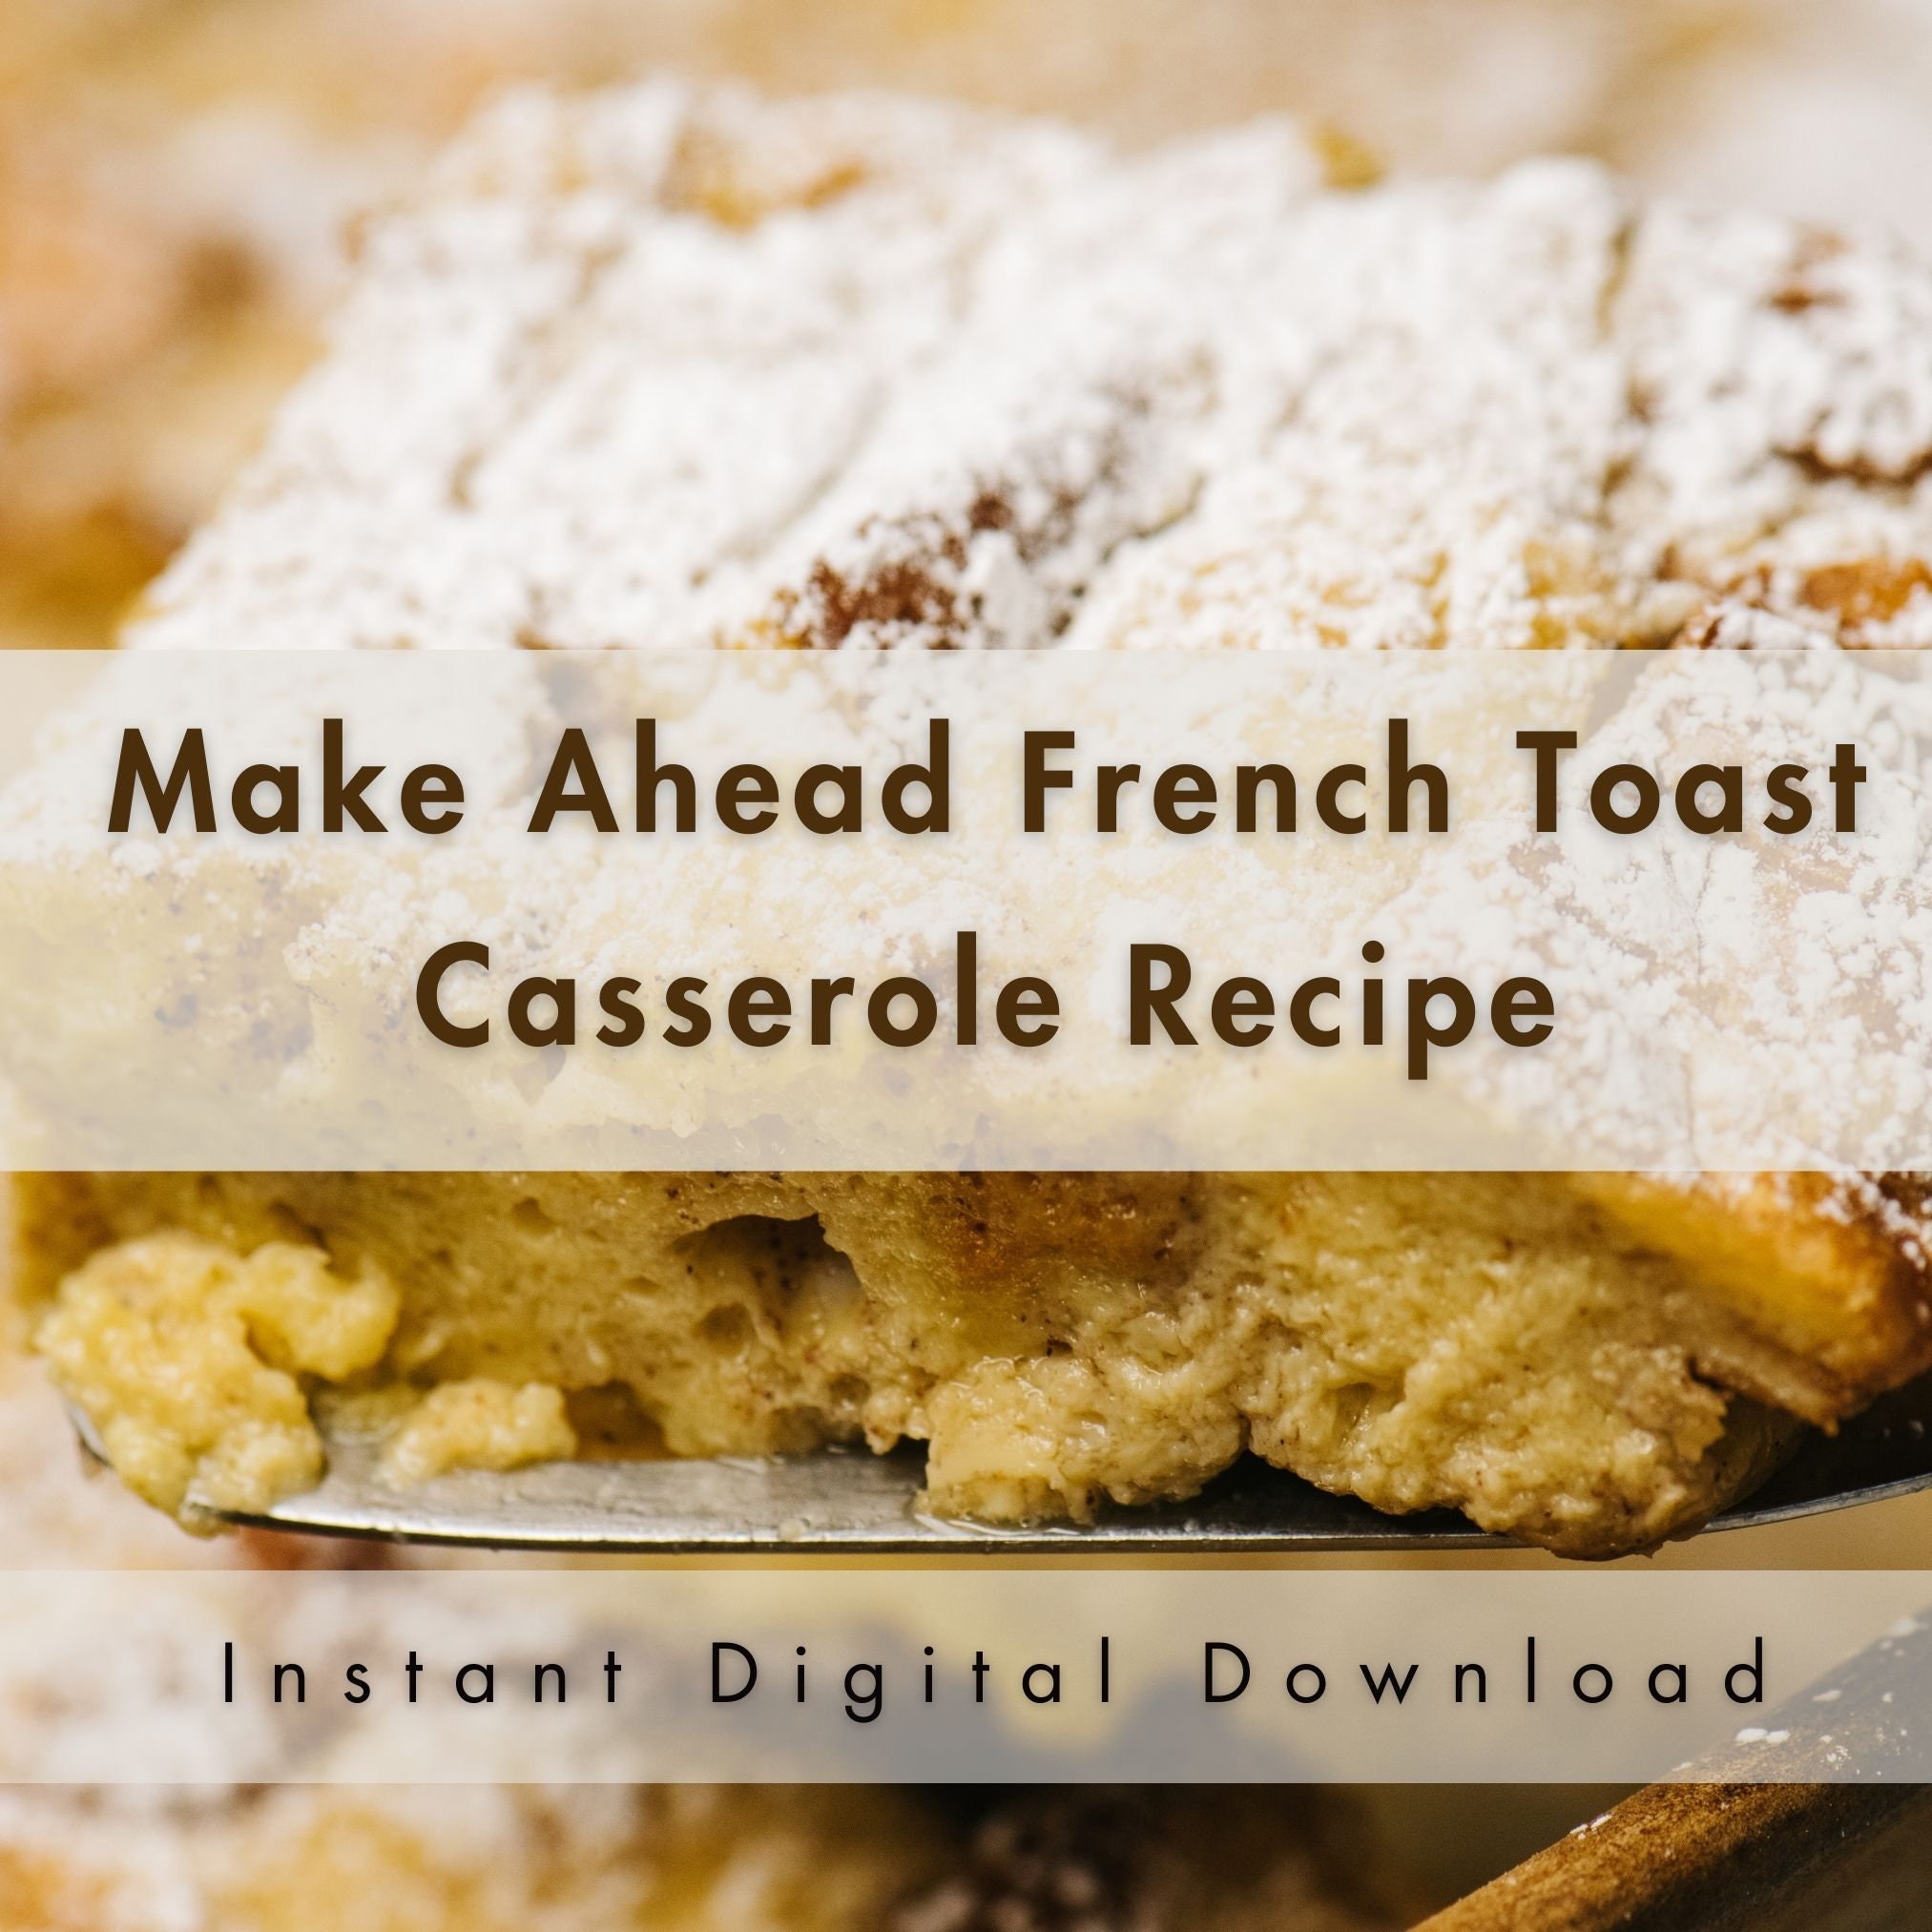 Pie maker condensed milk French toast recipe